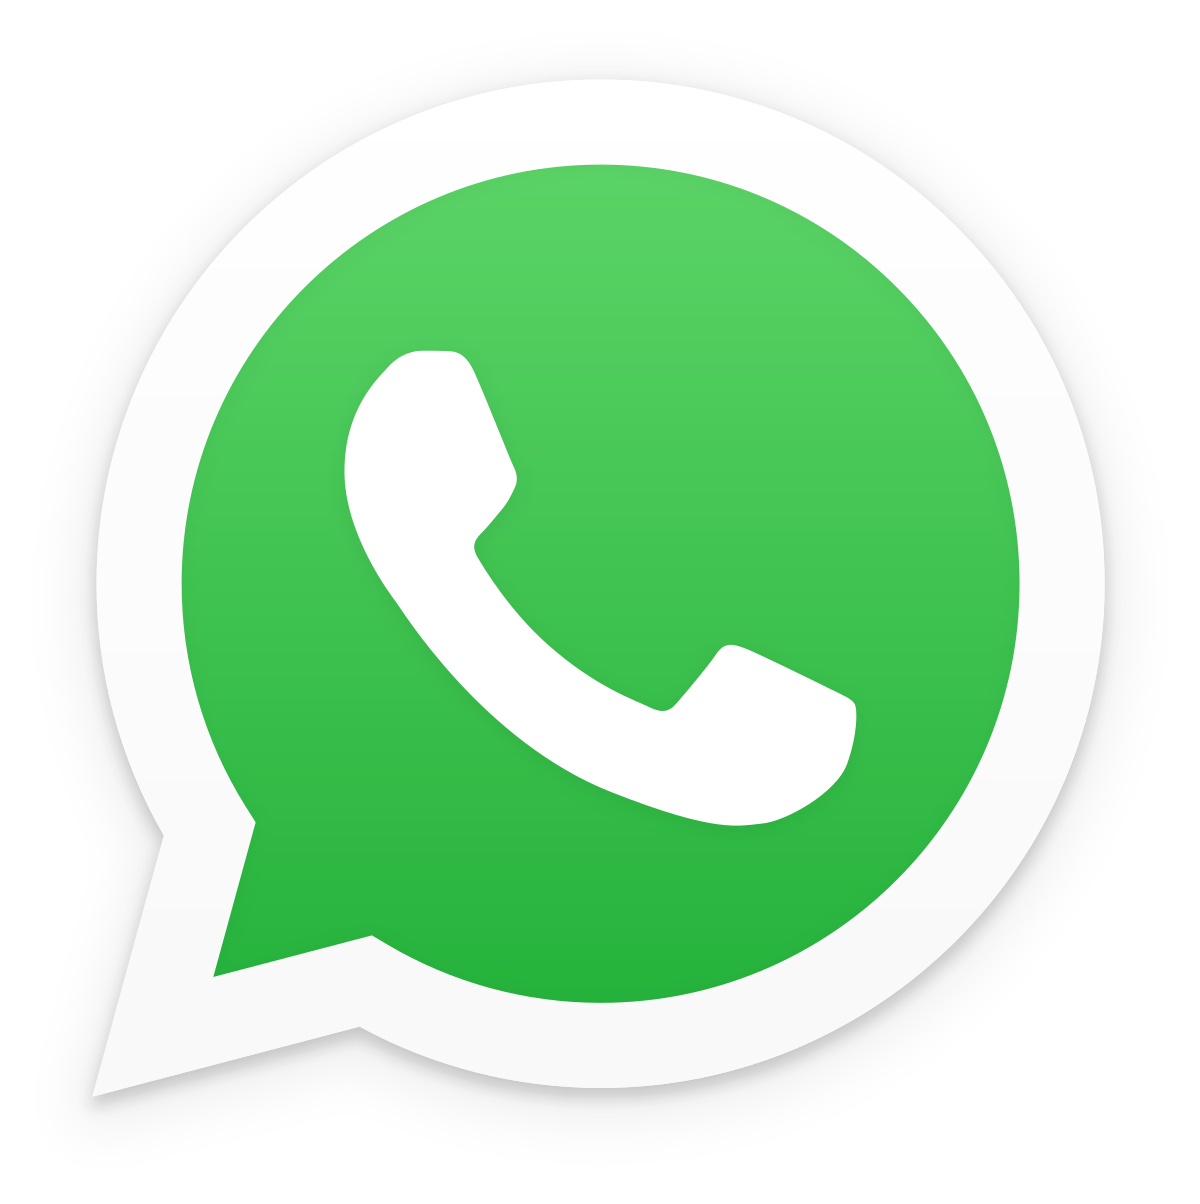 whatsapp下载电脑版官方正版-WhatsApp 电脑版